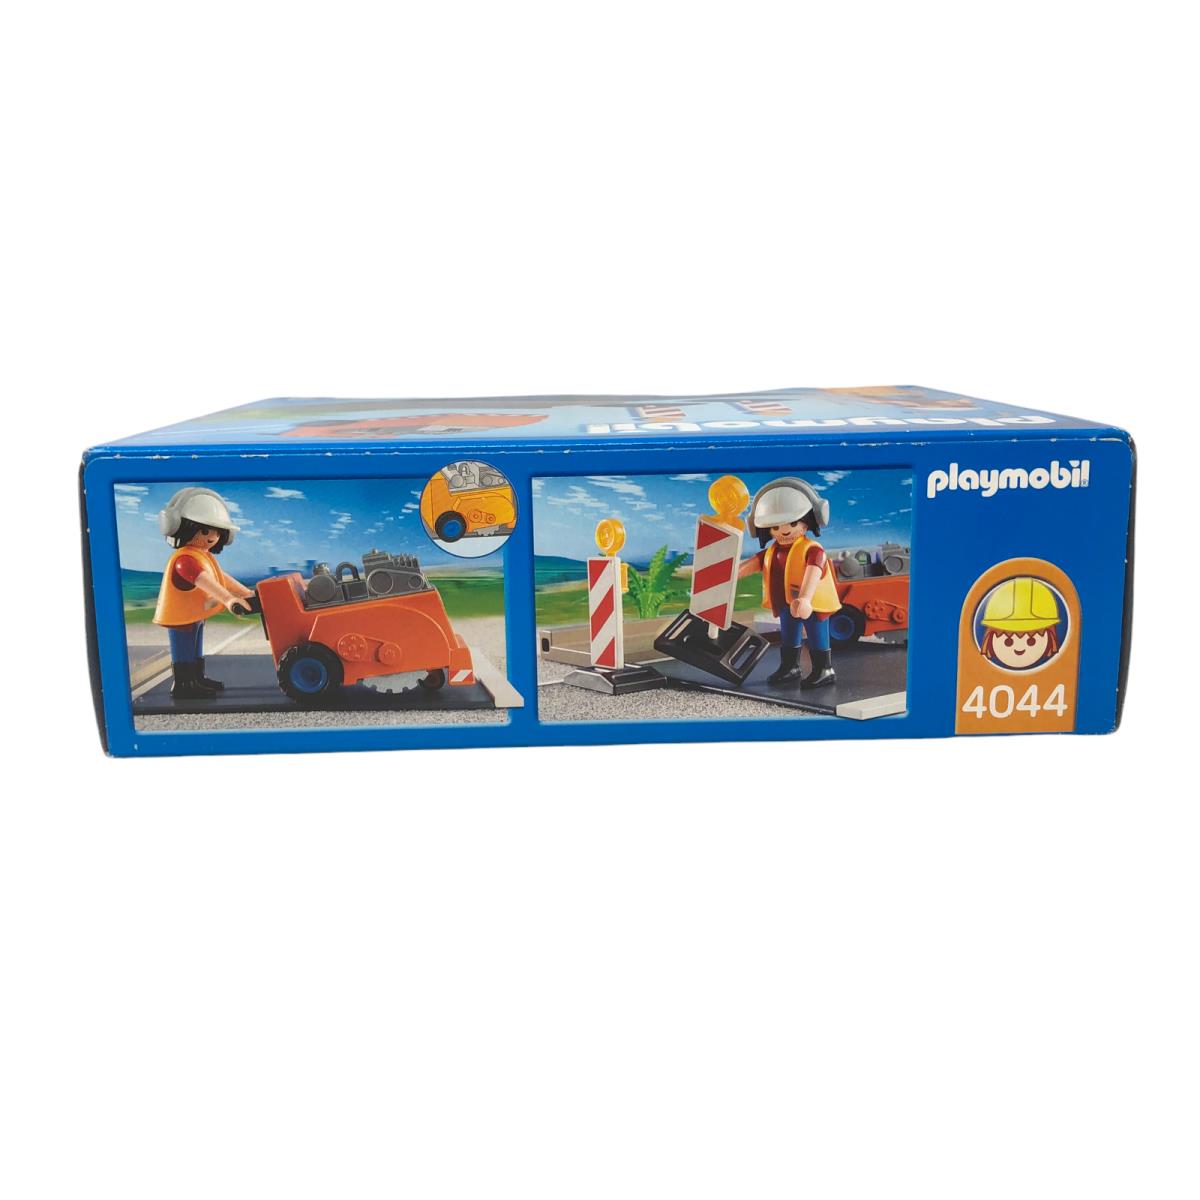 Playmobil toy  - Orange , Red